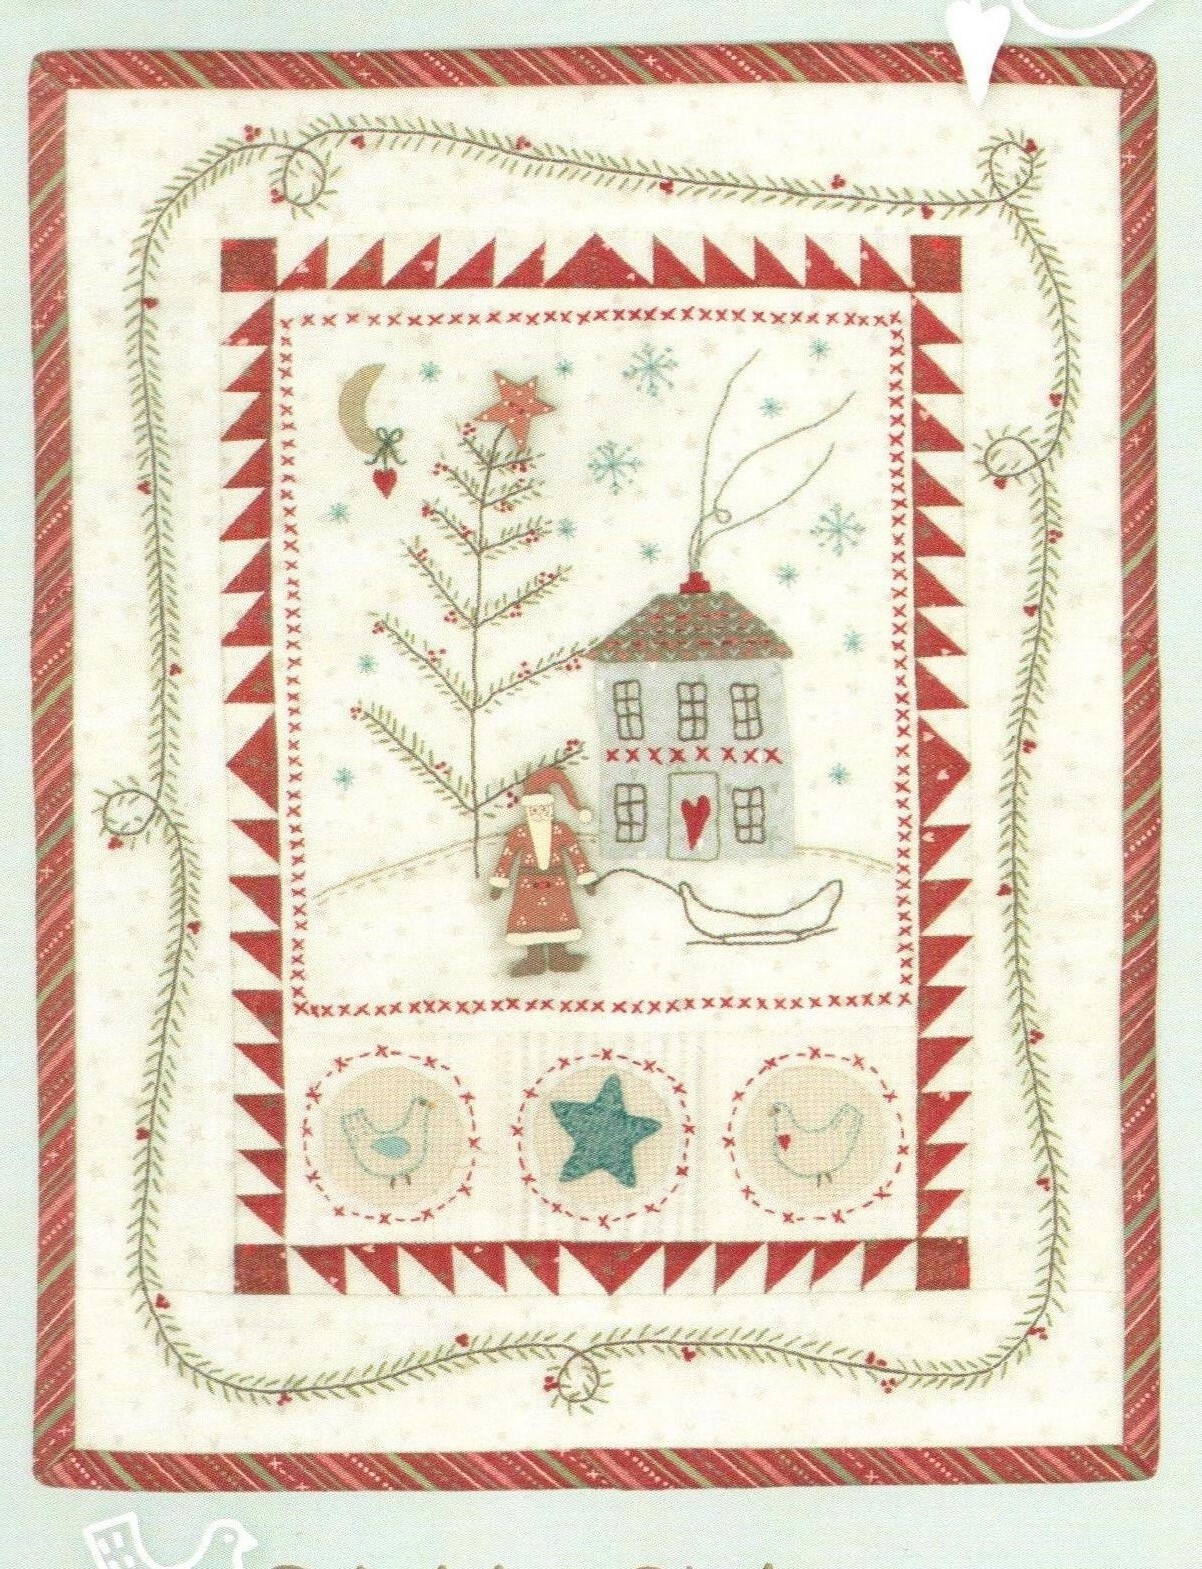 Primitive Hand Embroidery Patterns Primitive Christmas Quilt And Embroidery Pattern With Hand Painted Jolly Santa Button Pack